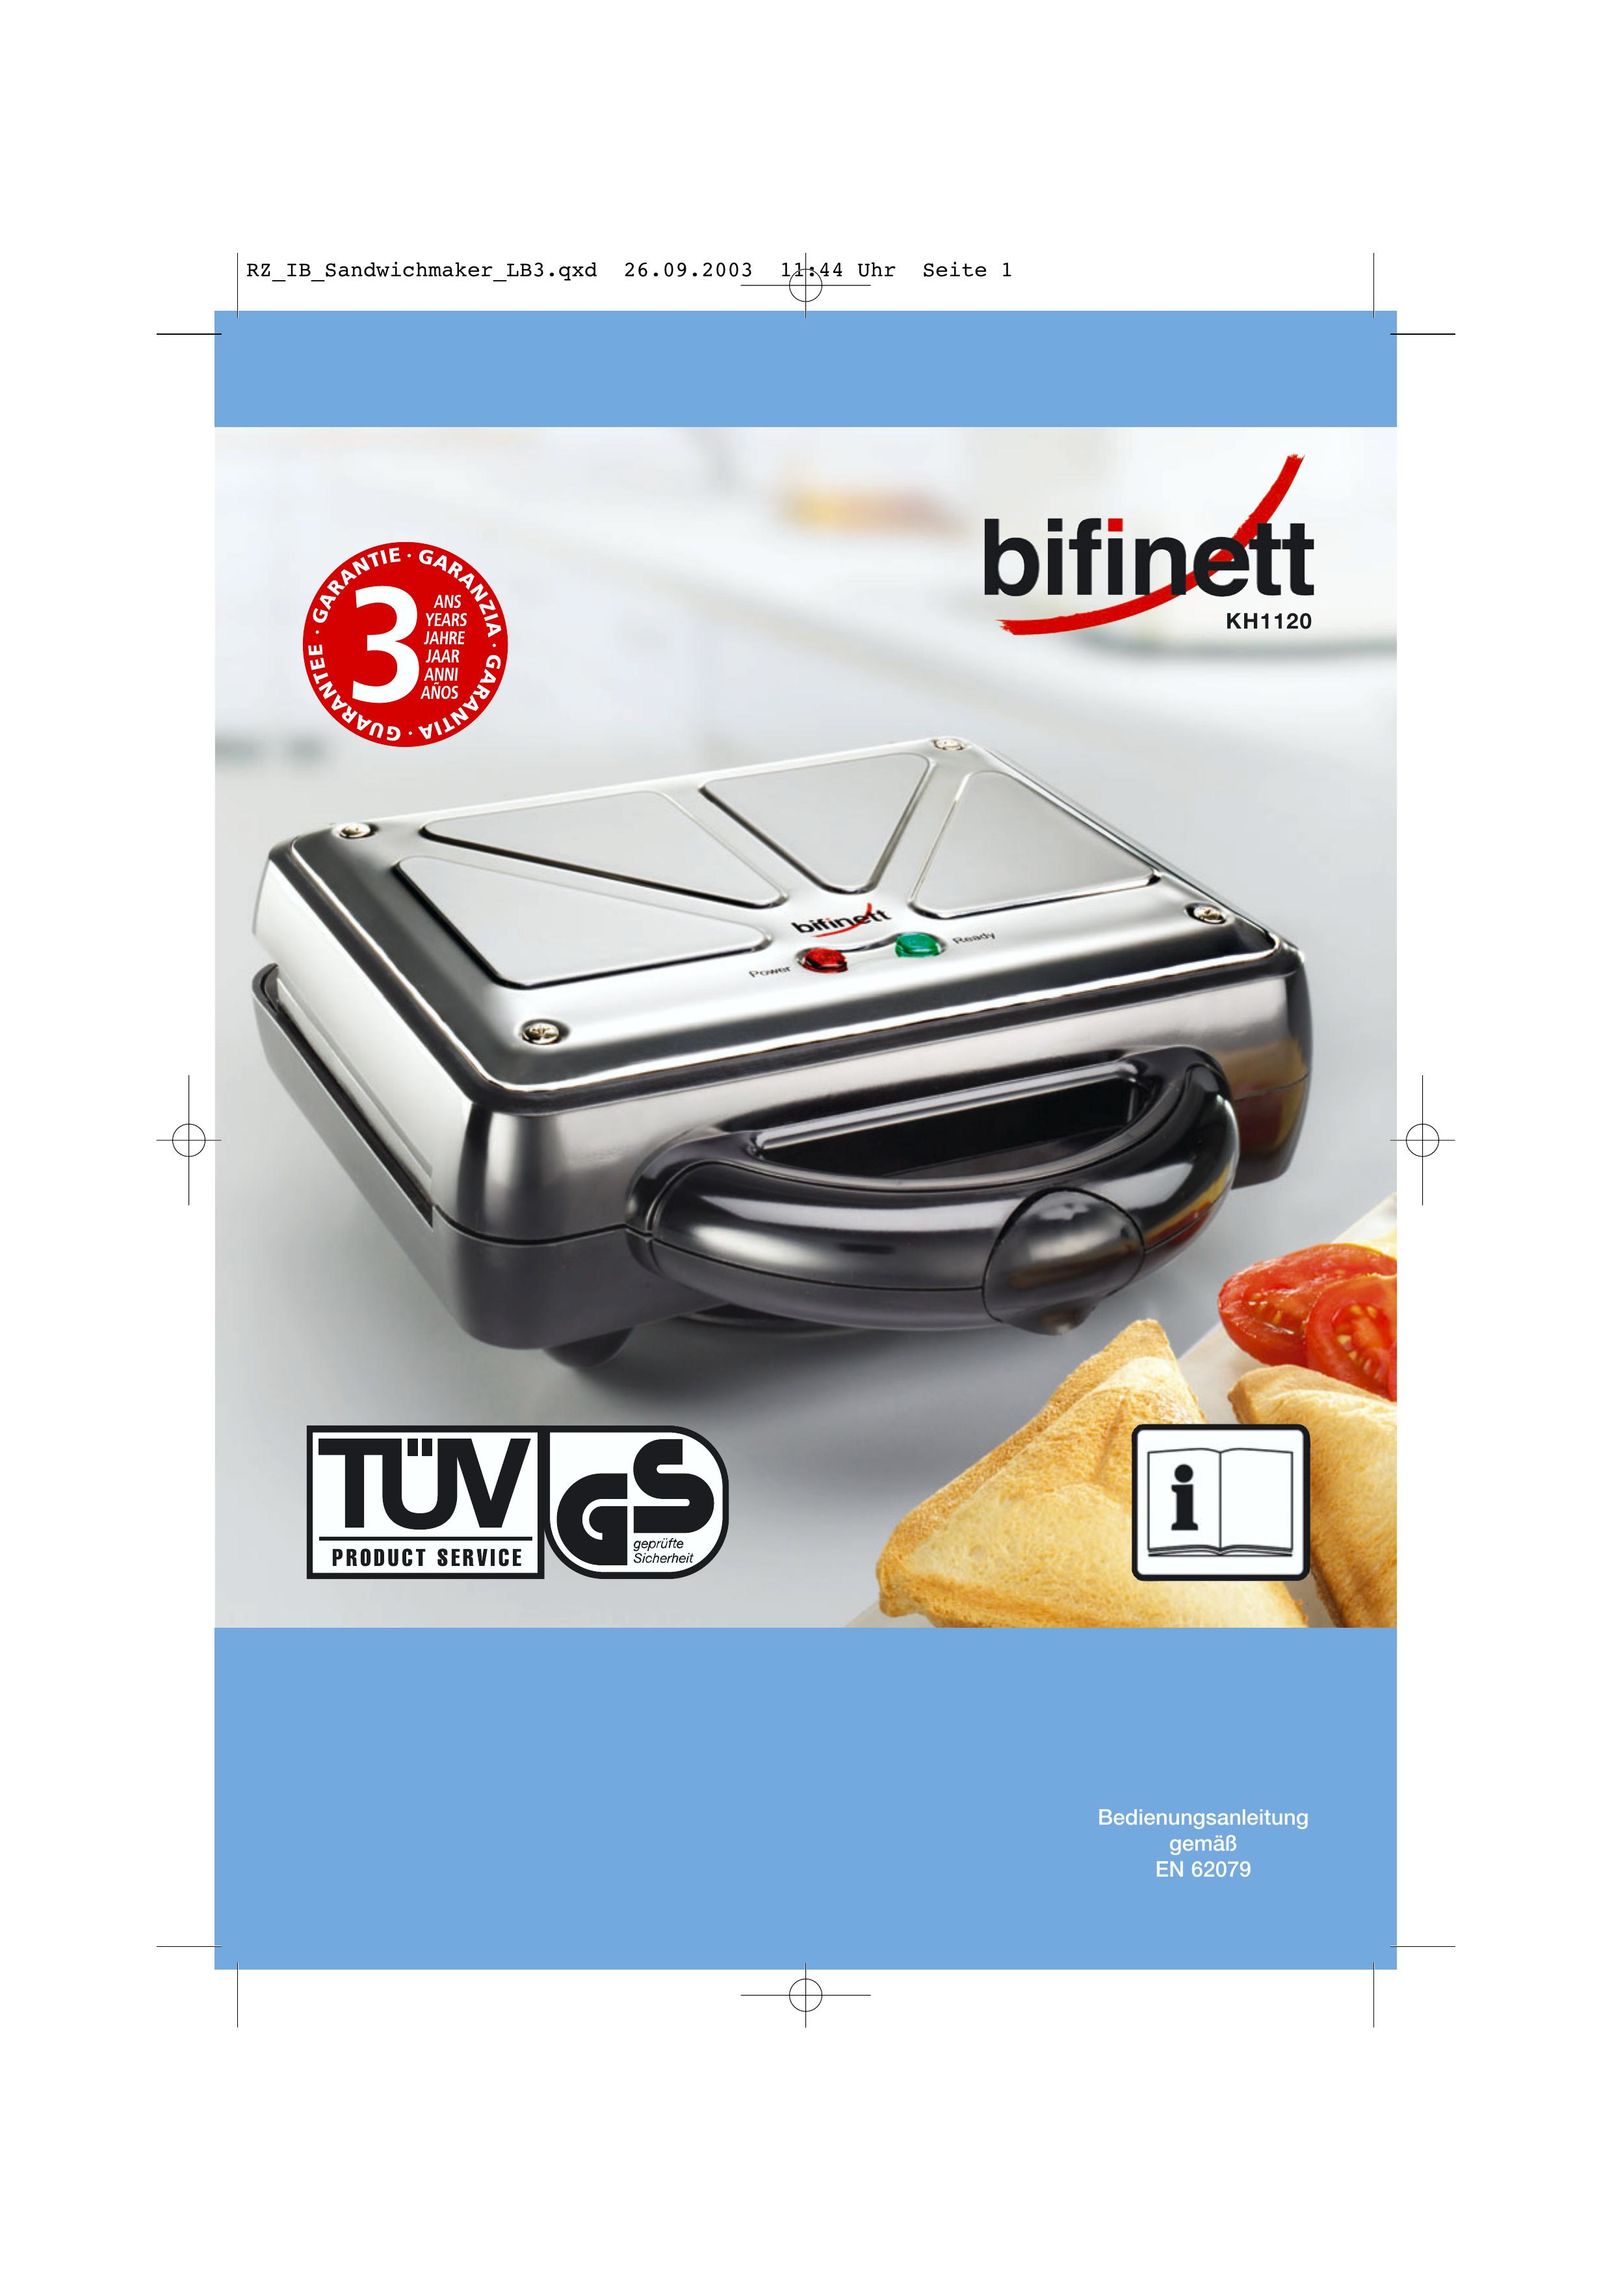 Bifinett KH 1120 Kitchen Grill User Manual